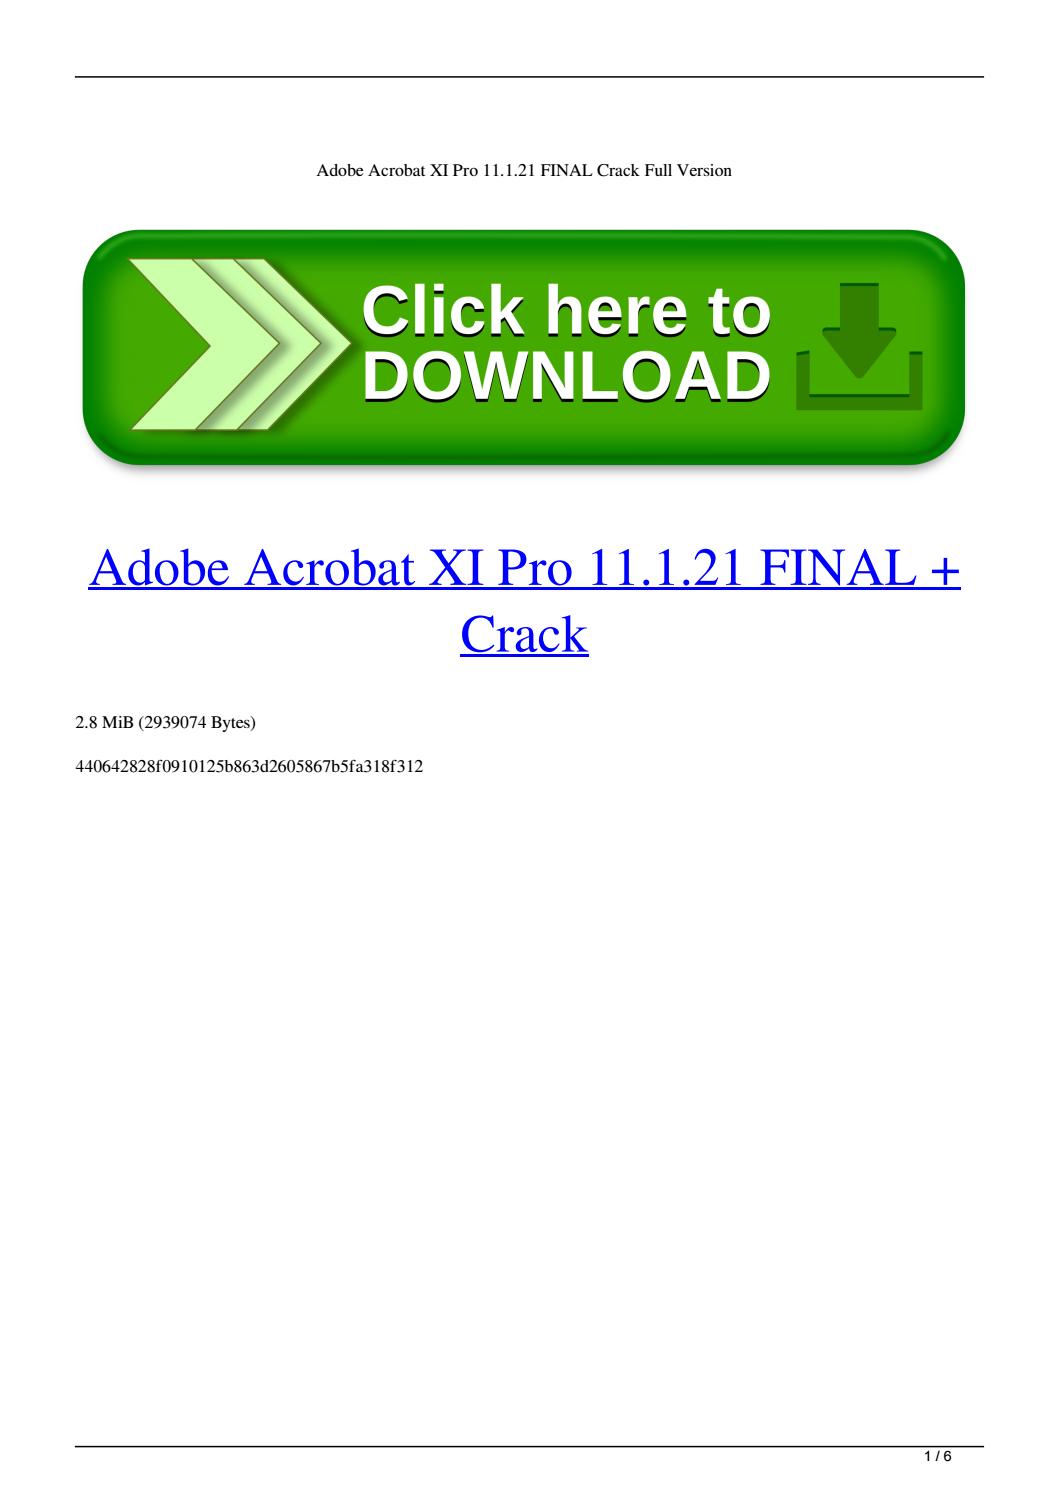 Acrobat X Pro Mac Download Crack